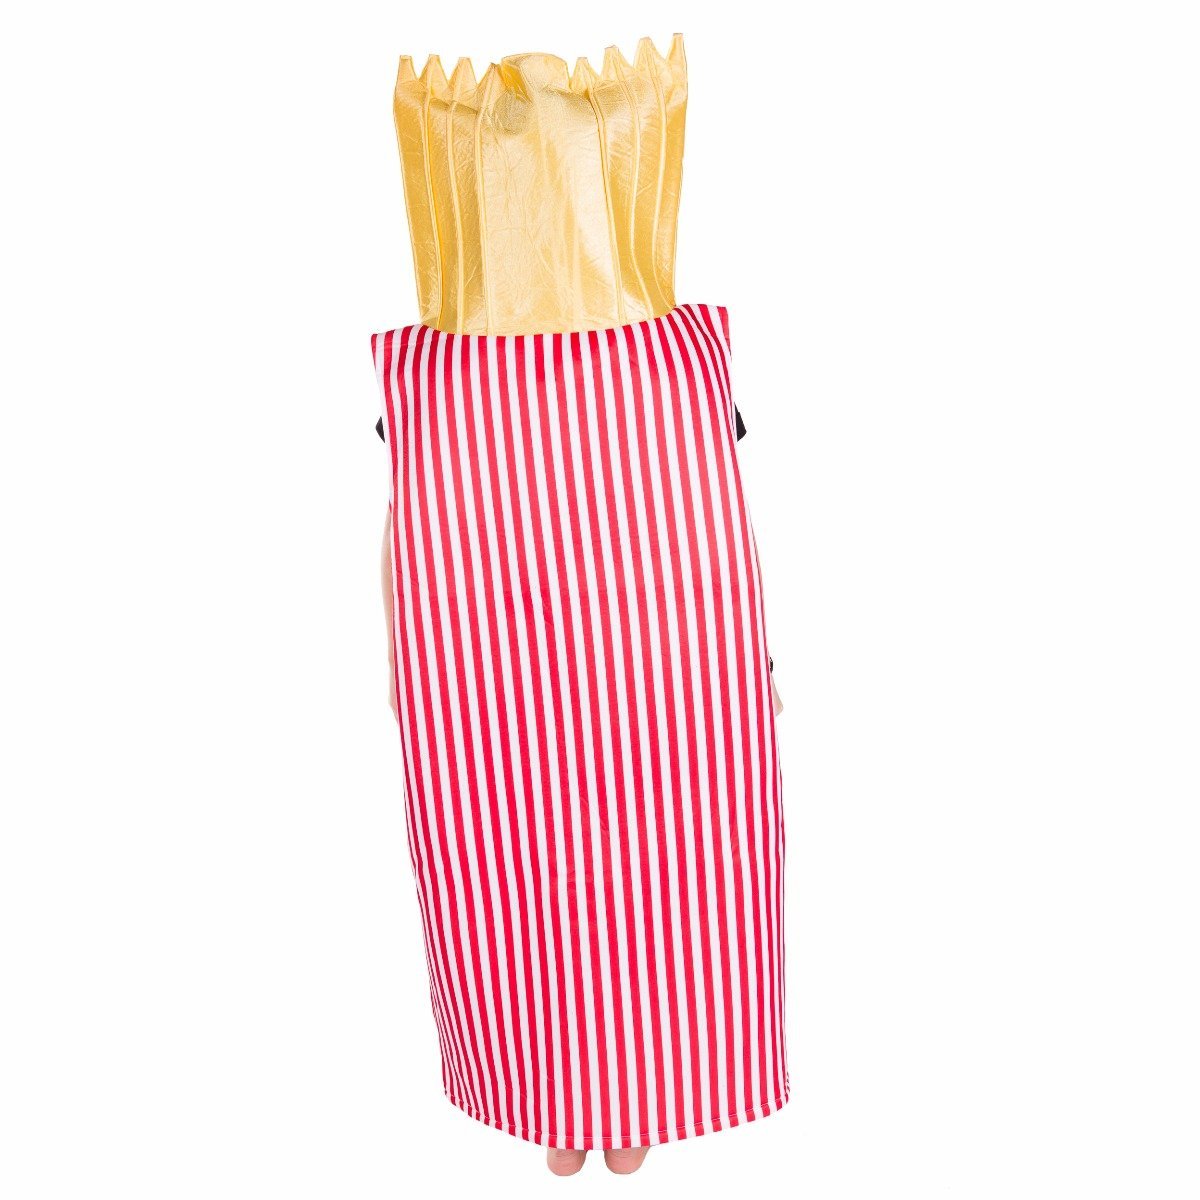 Bodysocks - French Fries Costume